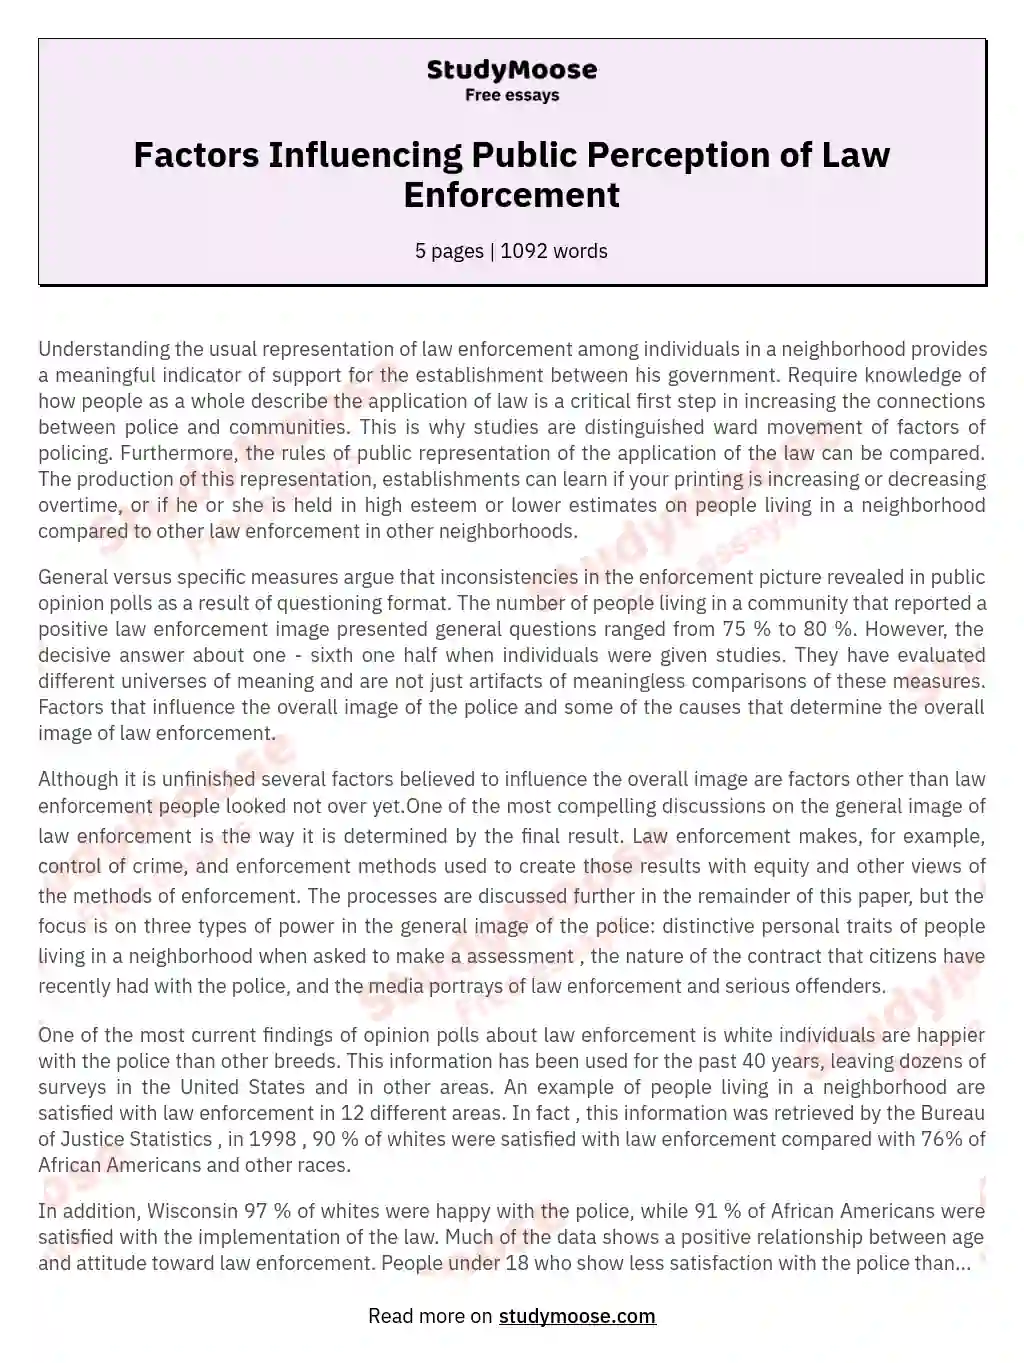 Factors Influencing Public Perception of Law Enforcement essay